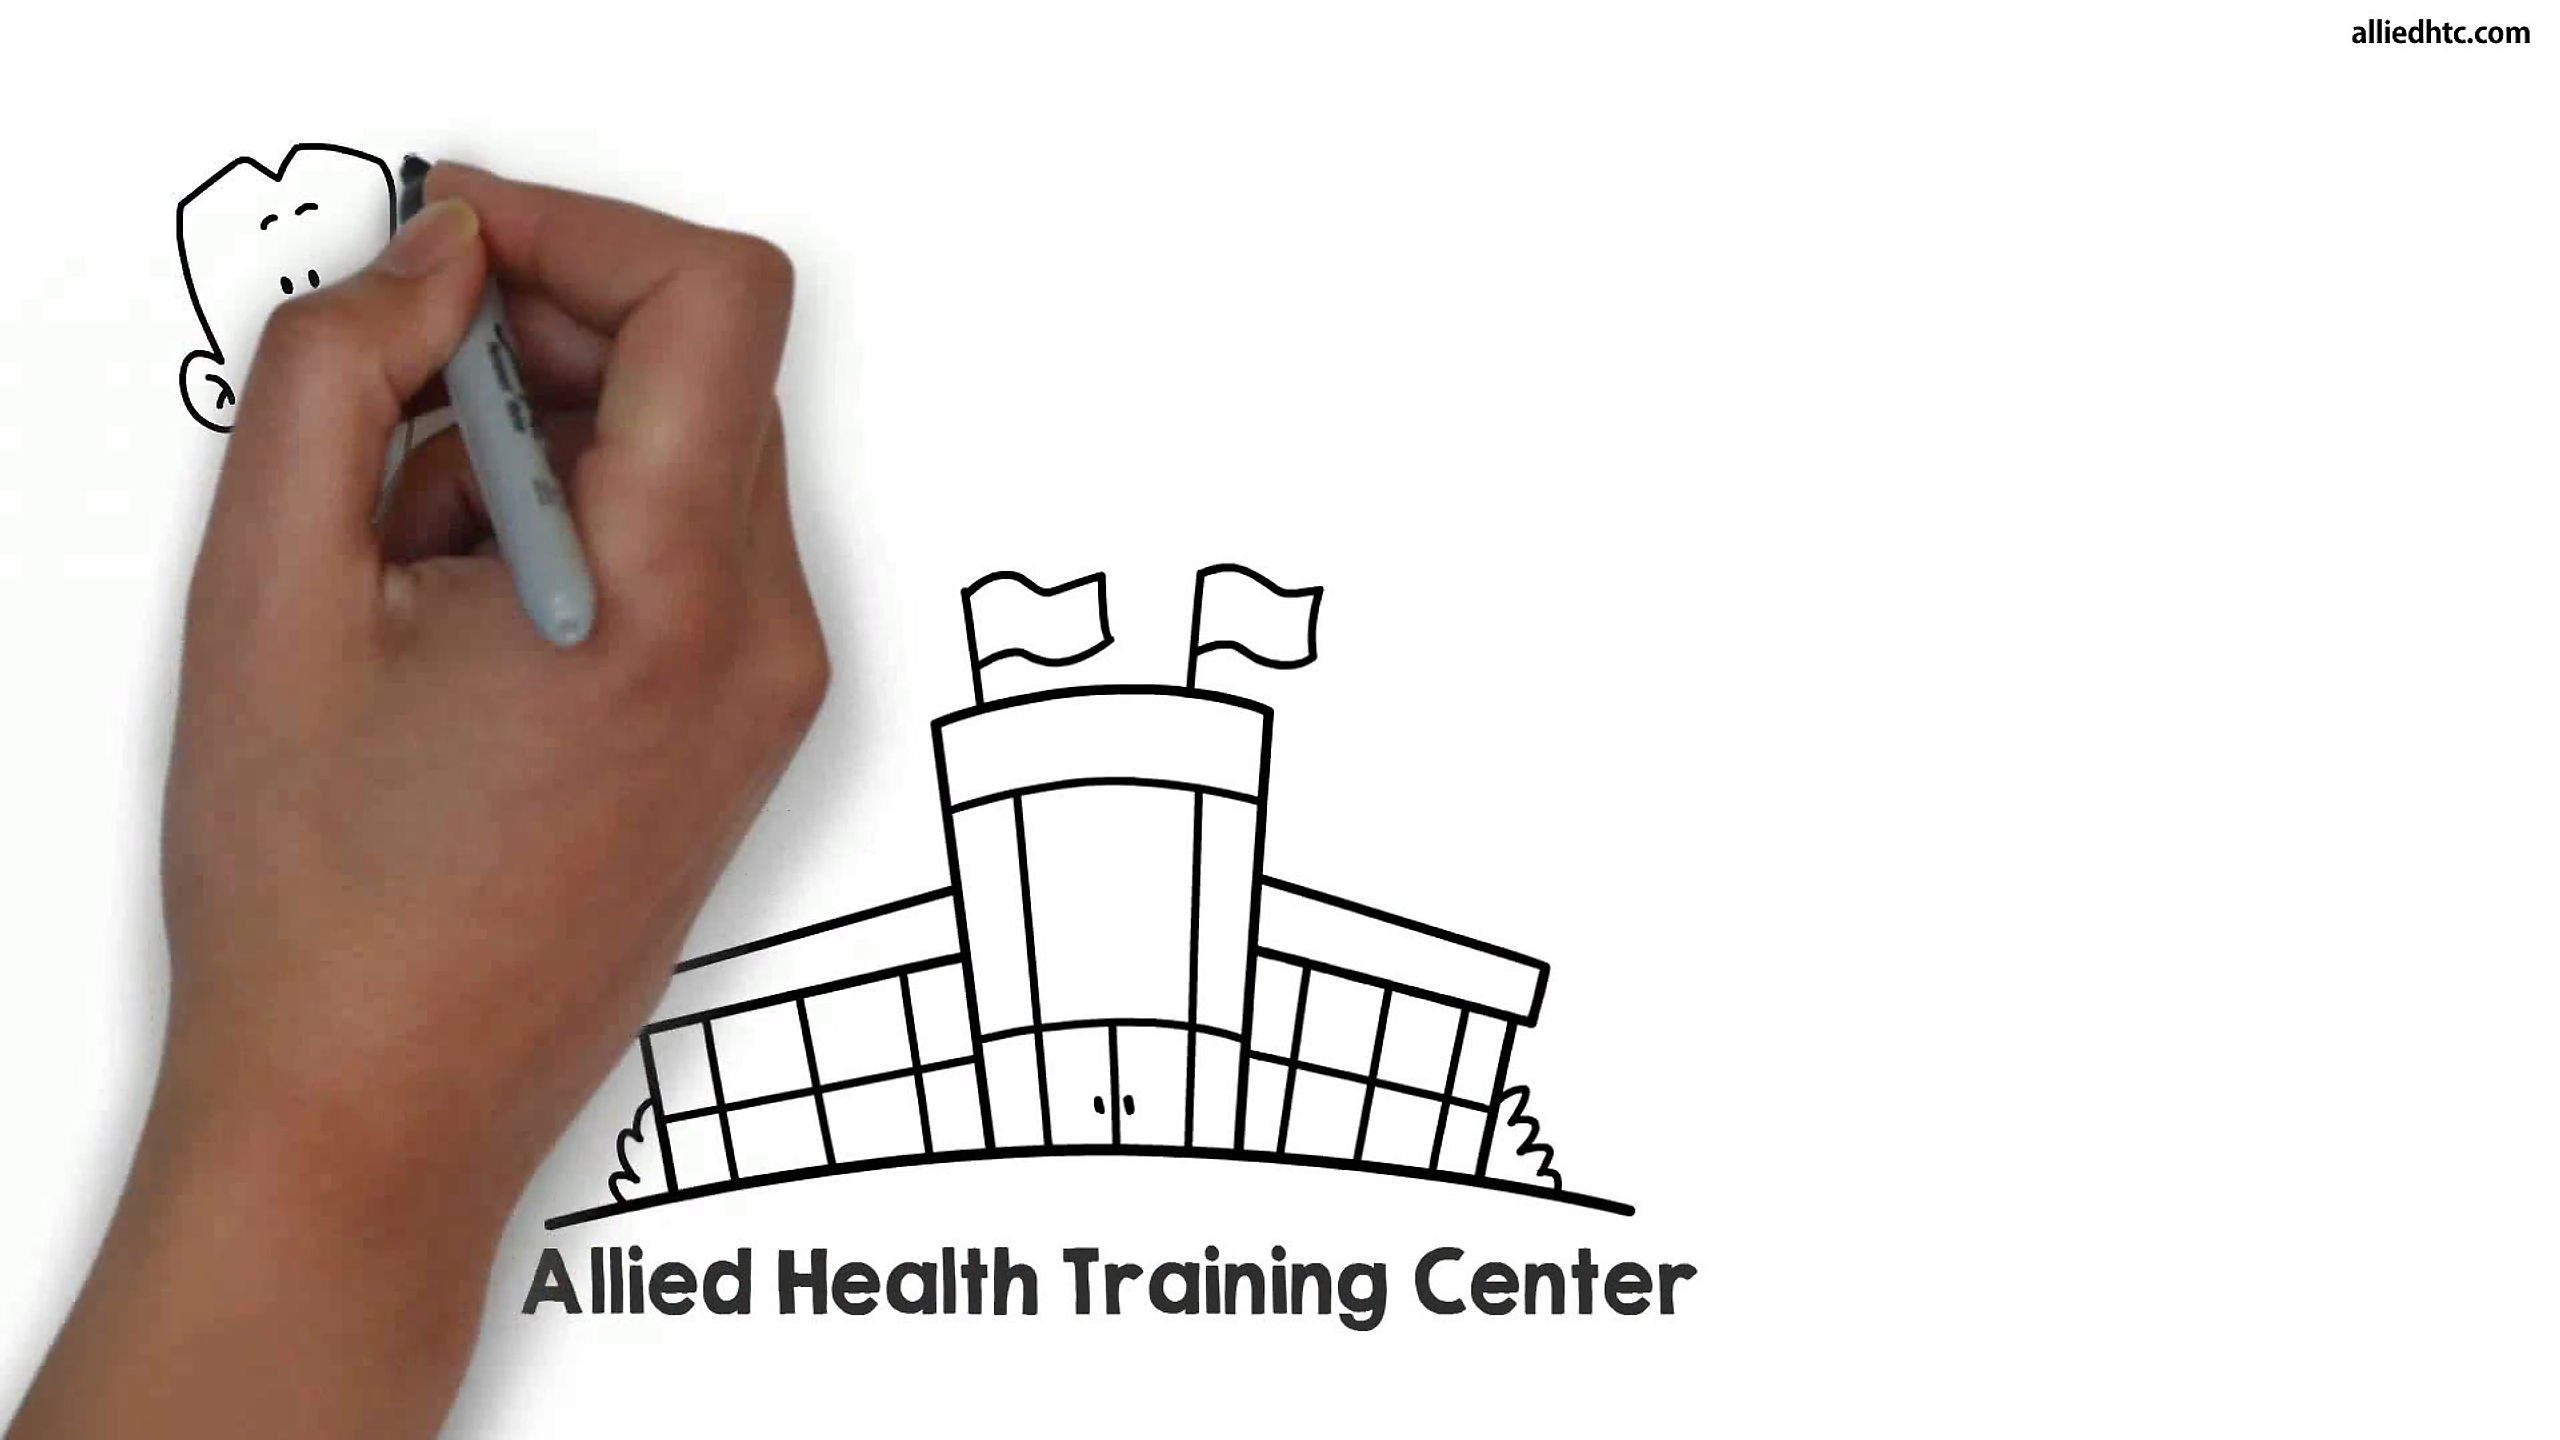 Allied Health Training Center